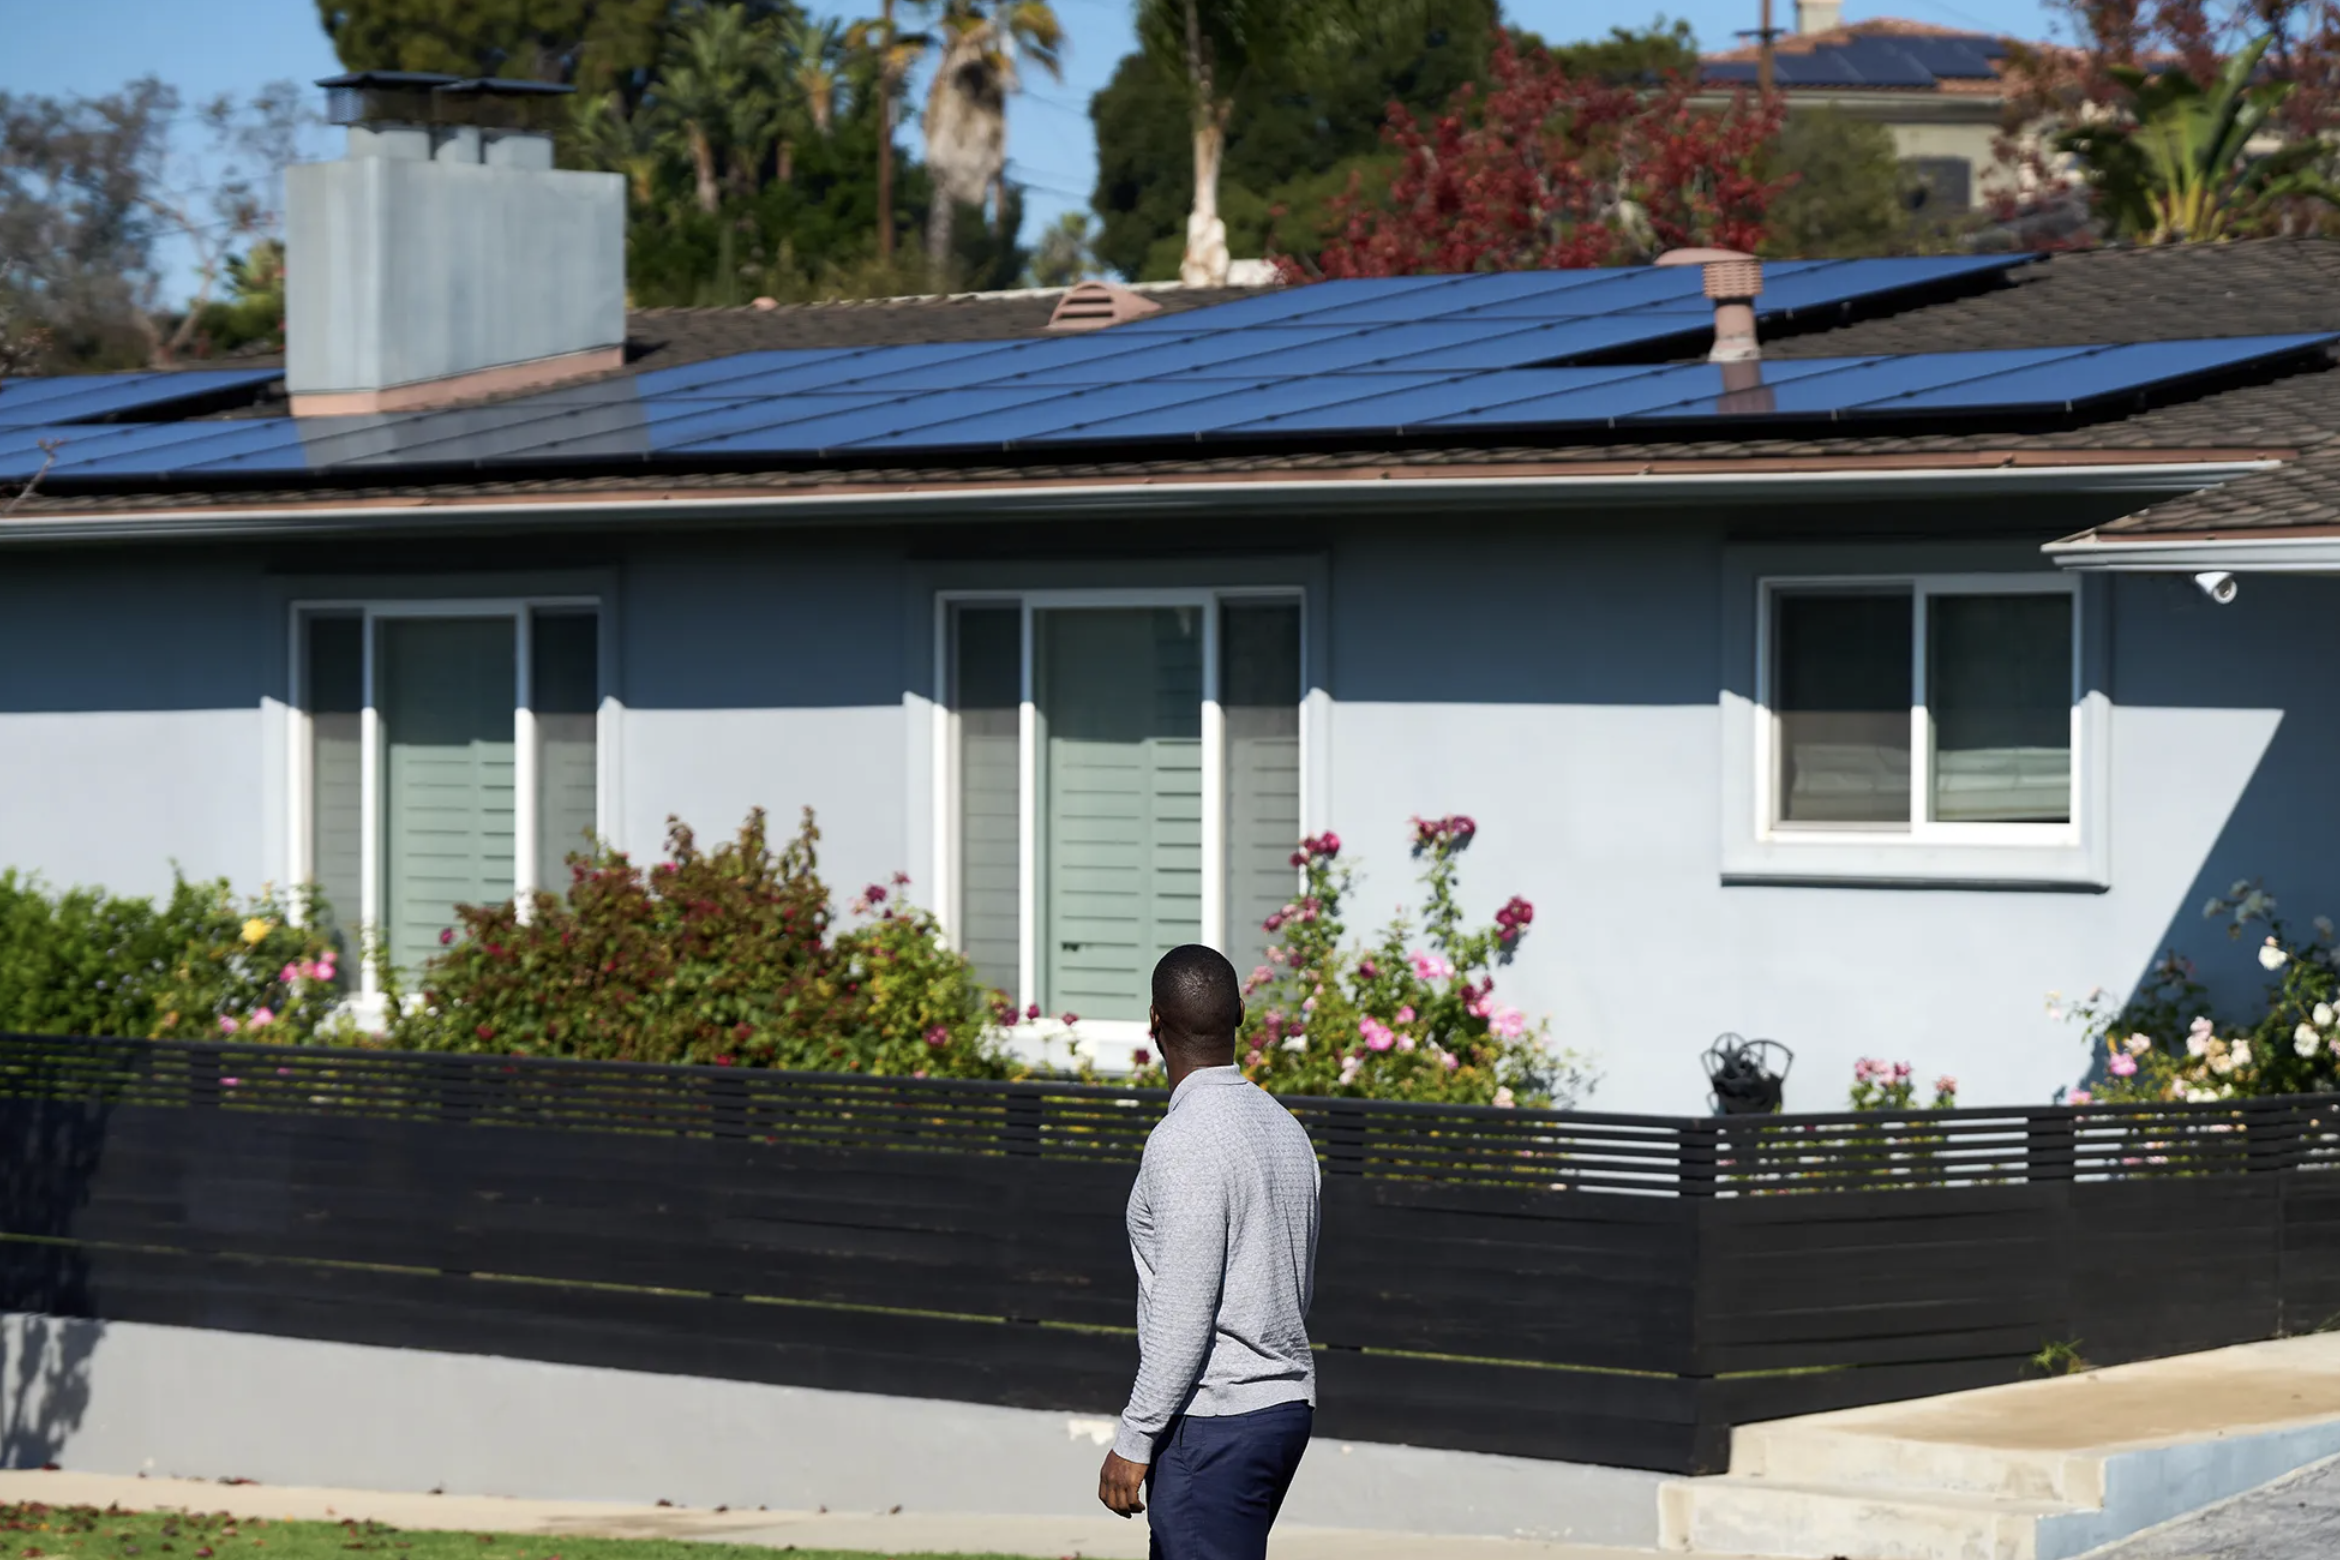 Man looks at solar panels